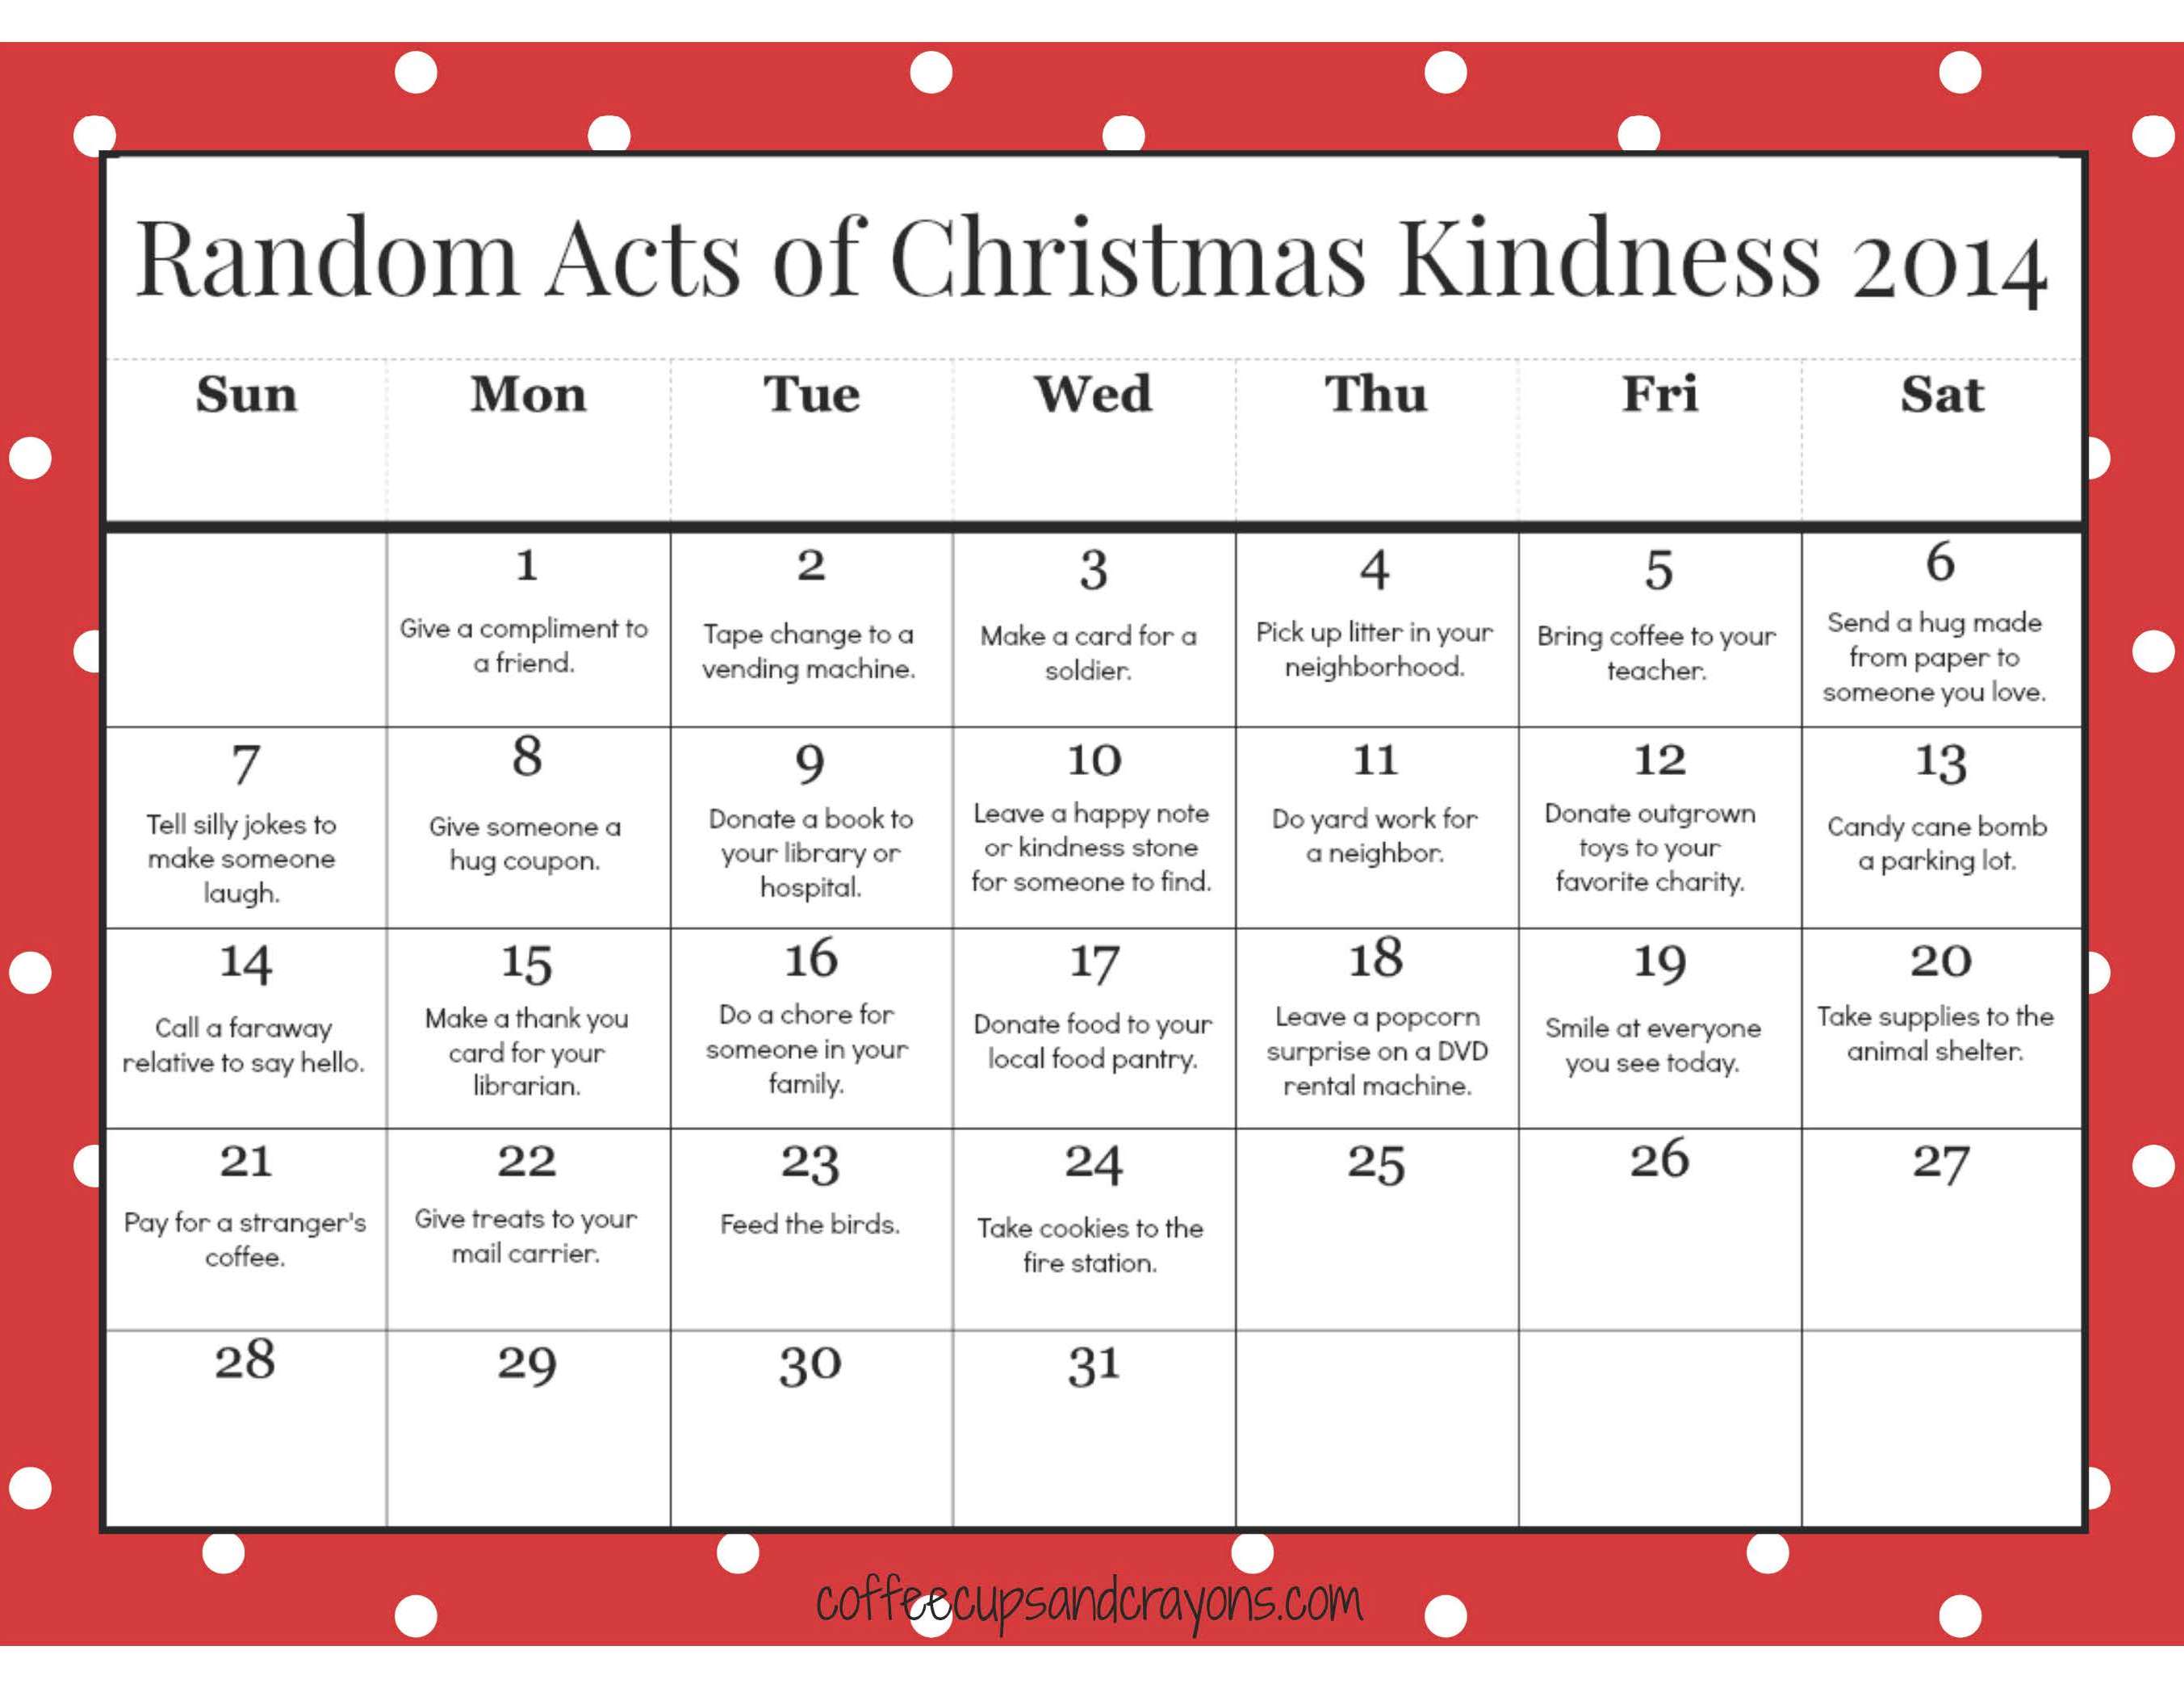 Random-Acts-of-Christmas-Kindness-Printable-Calendar-for-Kids.jpg  by Mediumystics